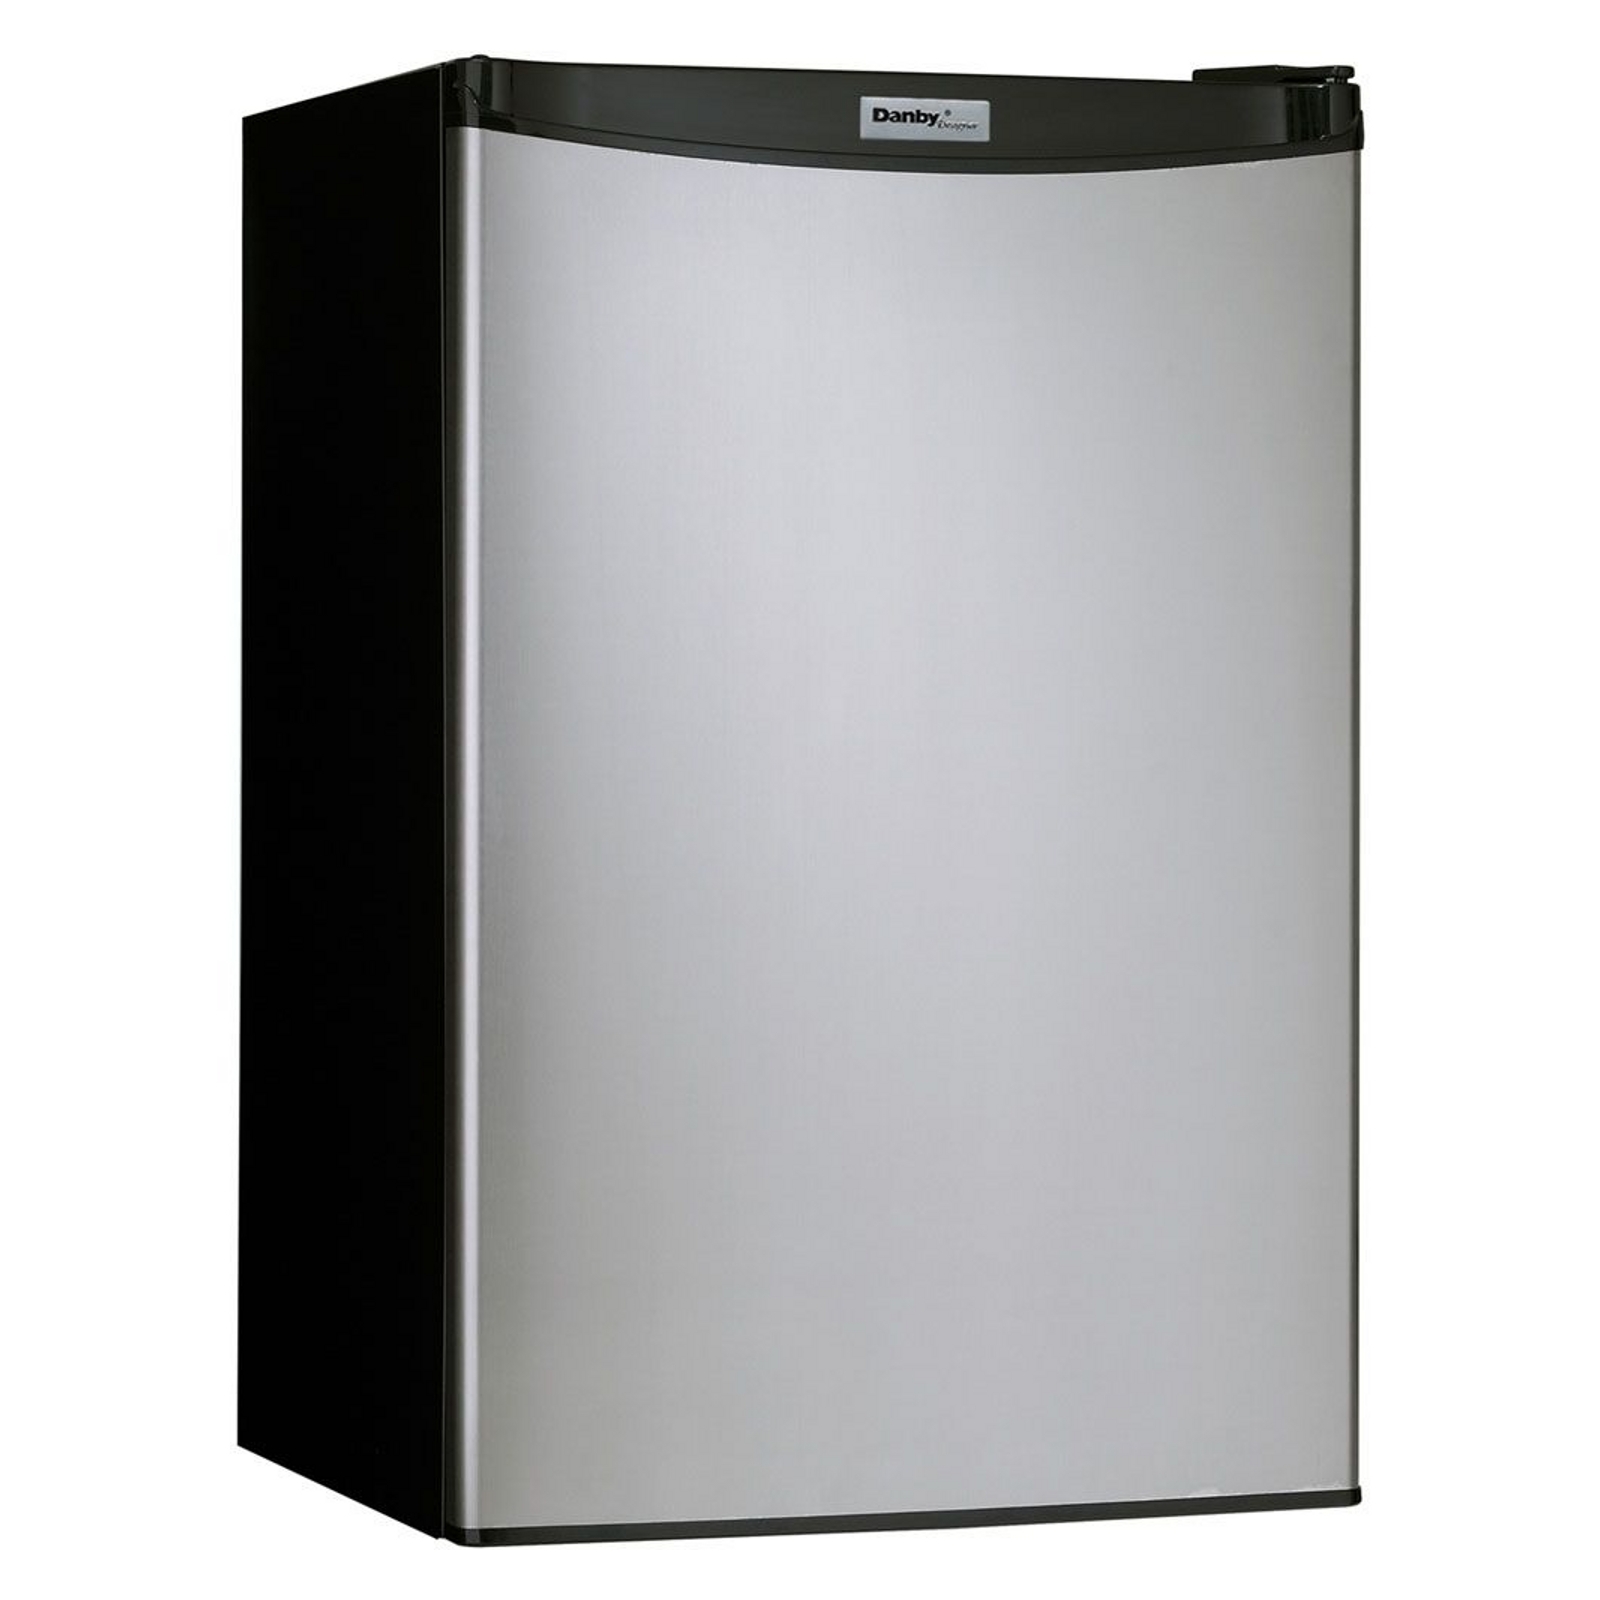 Danby DAR259BL 2.5 Cu. Ft. Designer Compact Refrigerator - Black